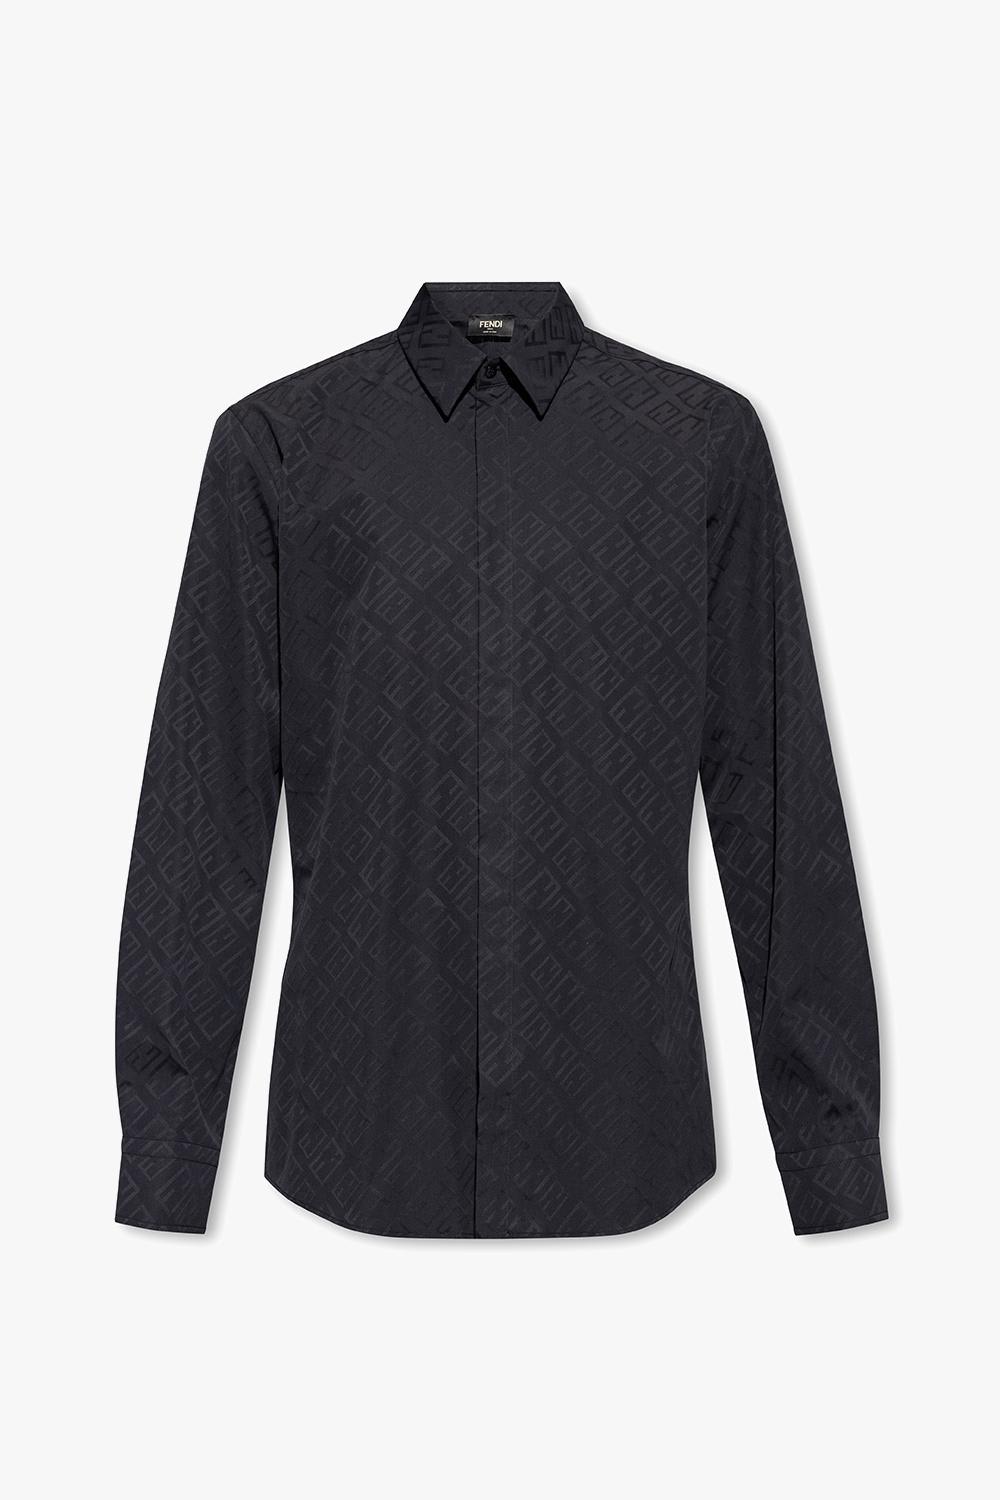 Fendi Monogrammed Shirt In Black